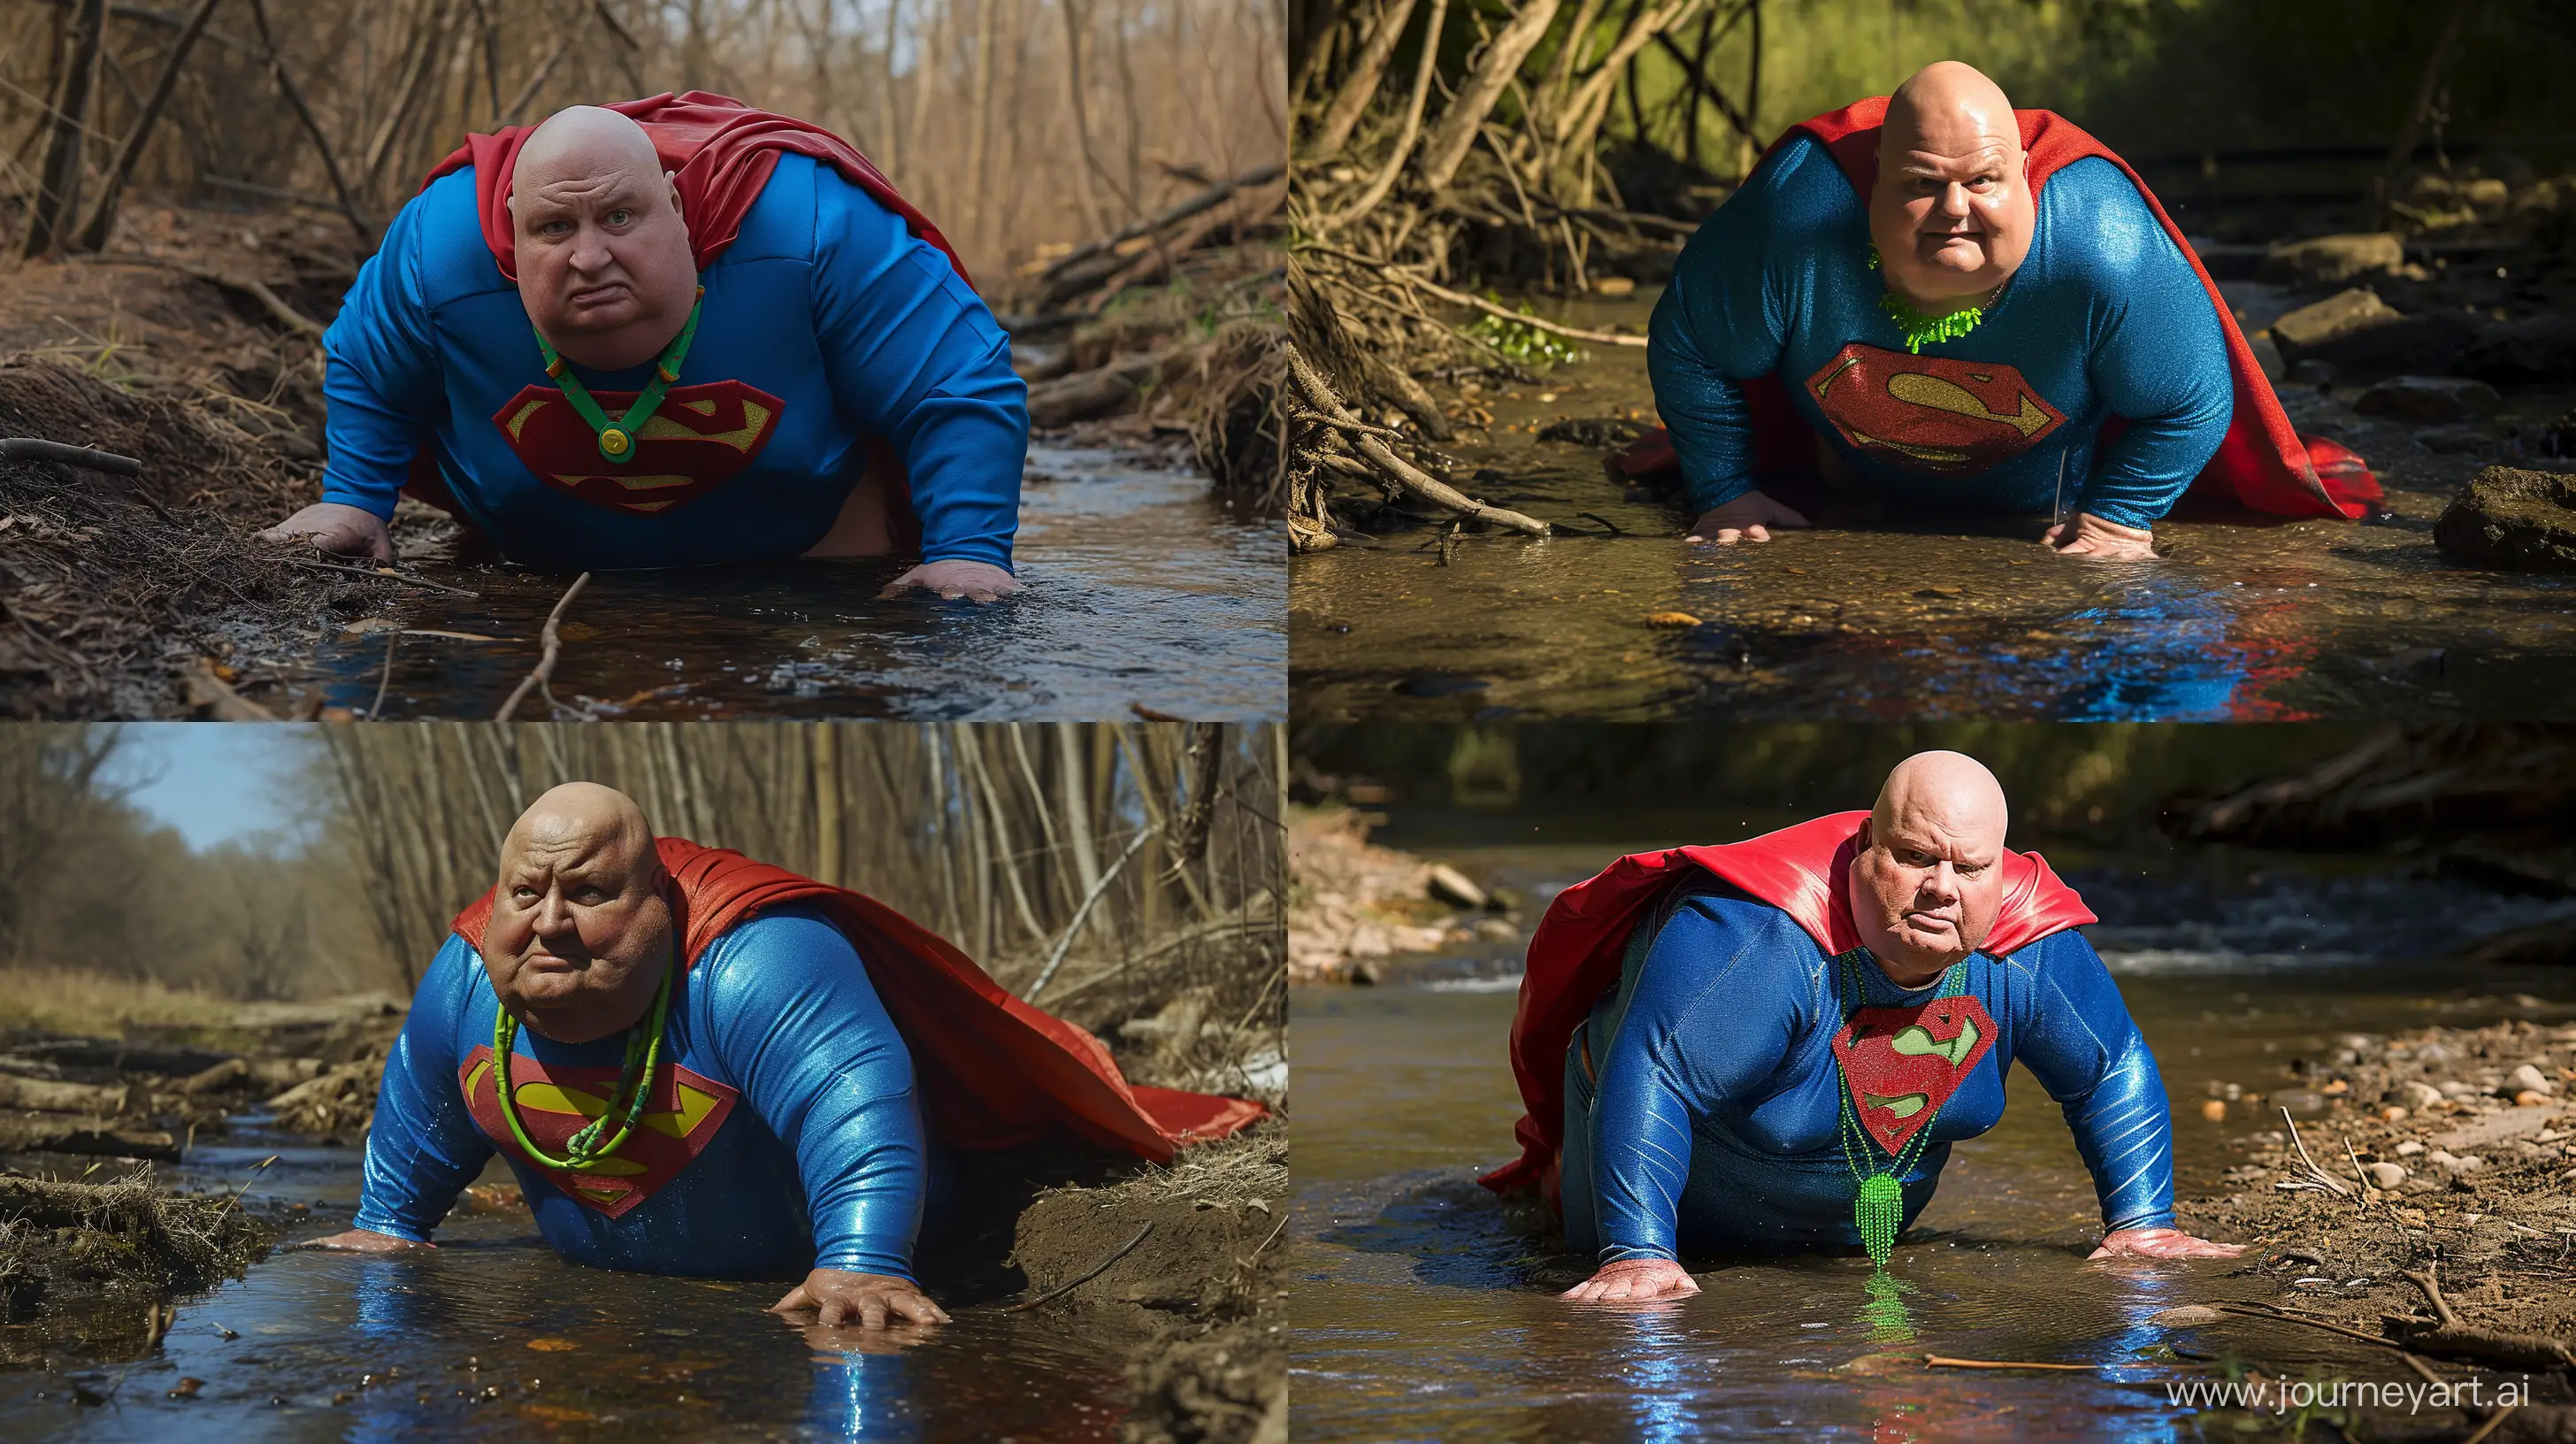 Elderly-Superman-Enjoying-Stream-Adventure-in-Vibrant-Blue-Costume